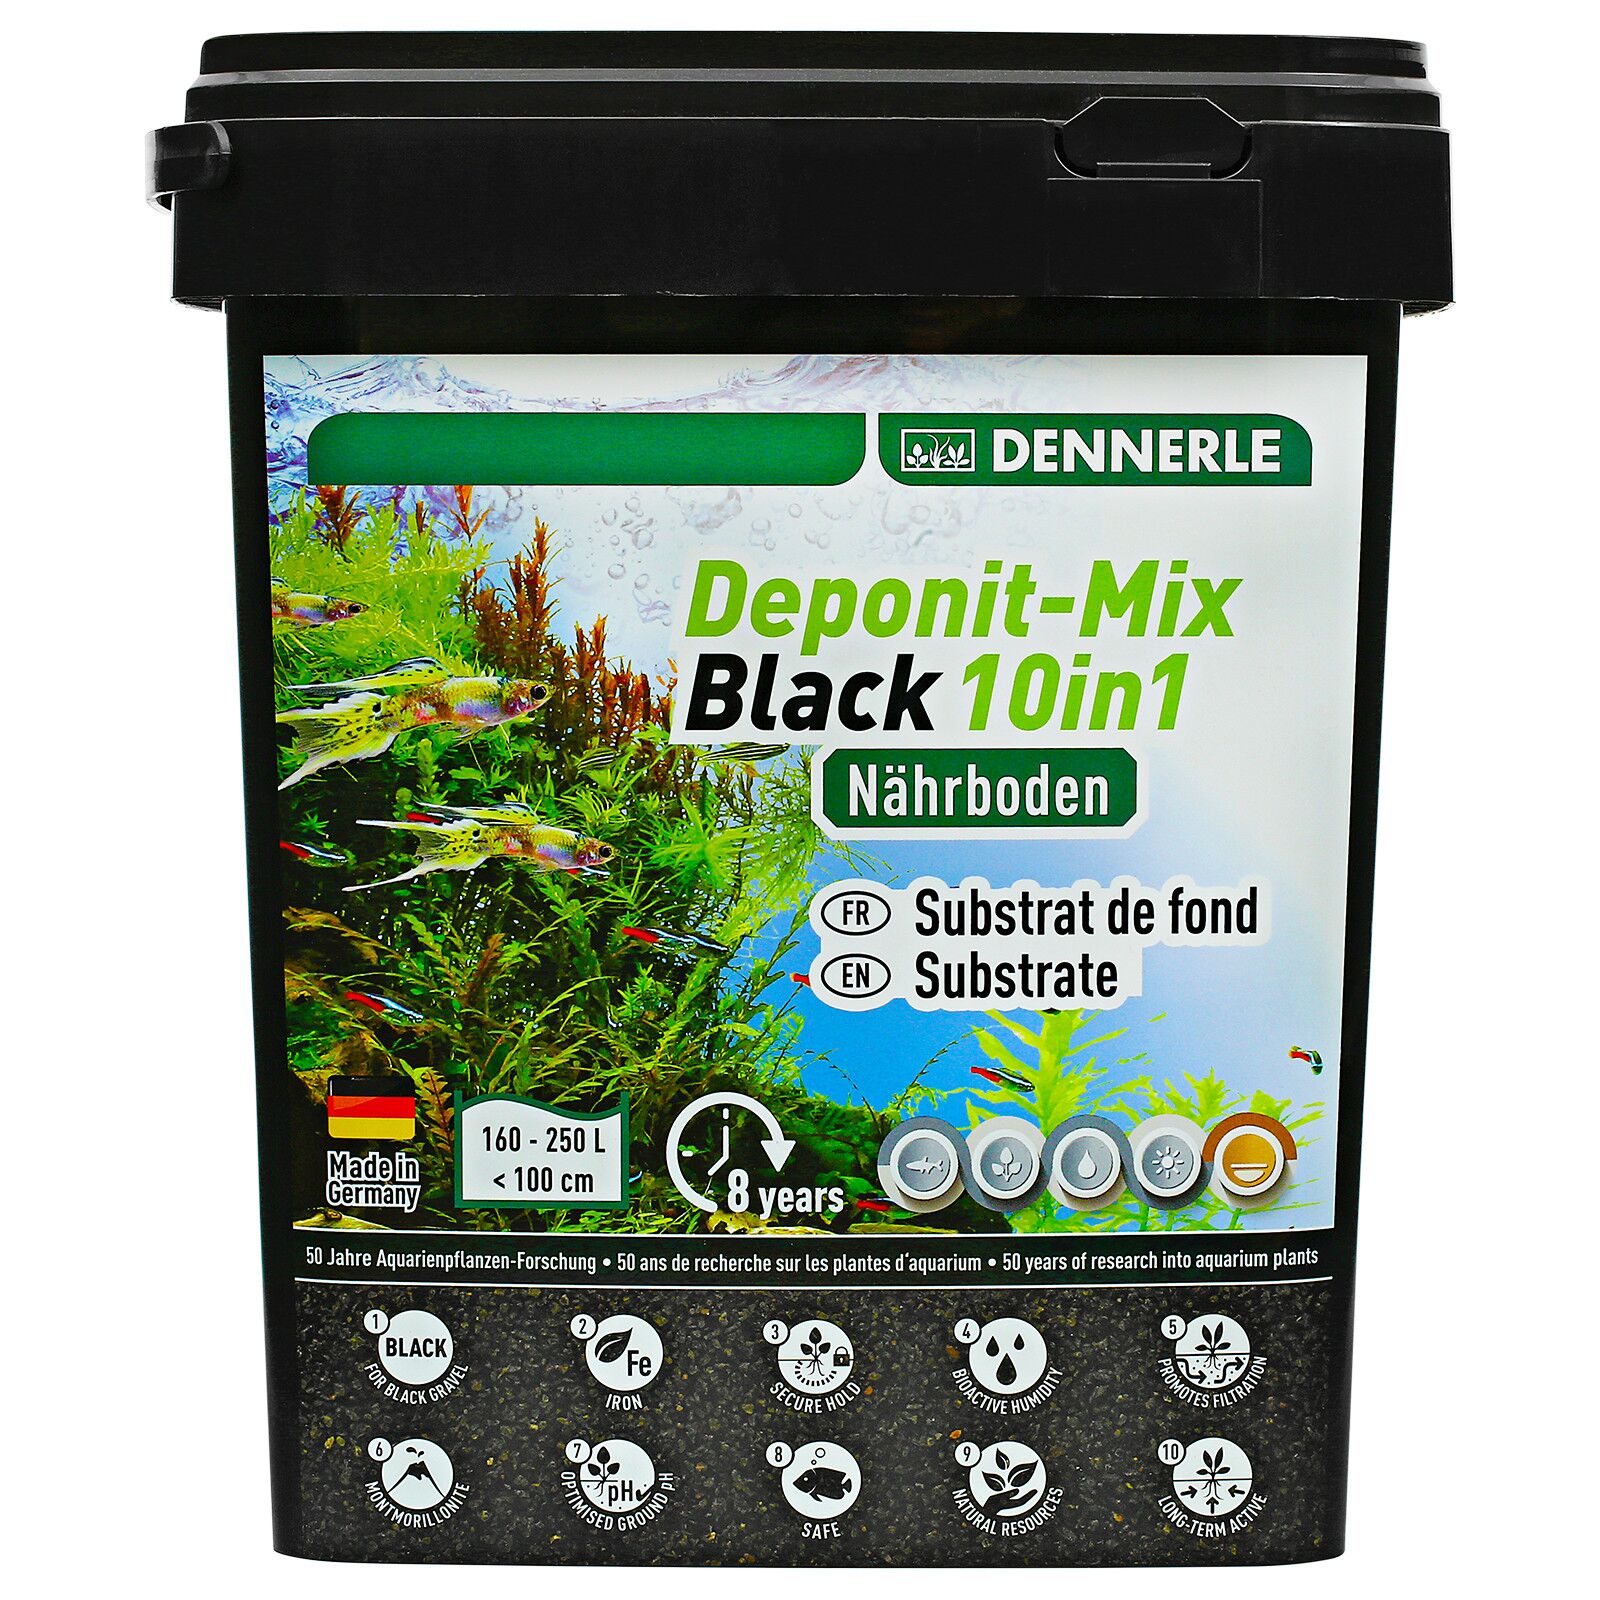 Dennerle - Deponit-Mix Black 10in1